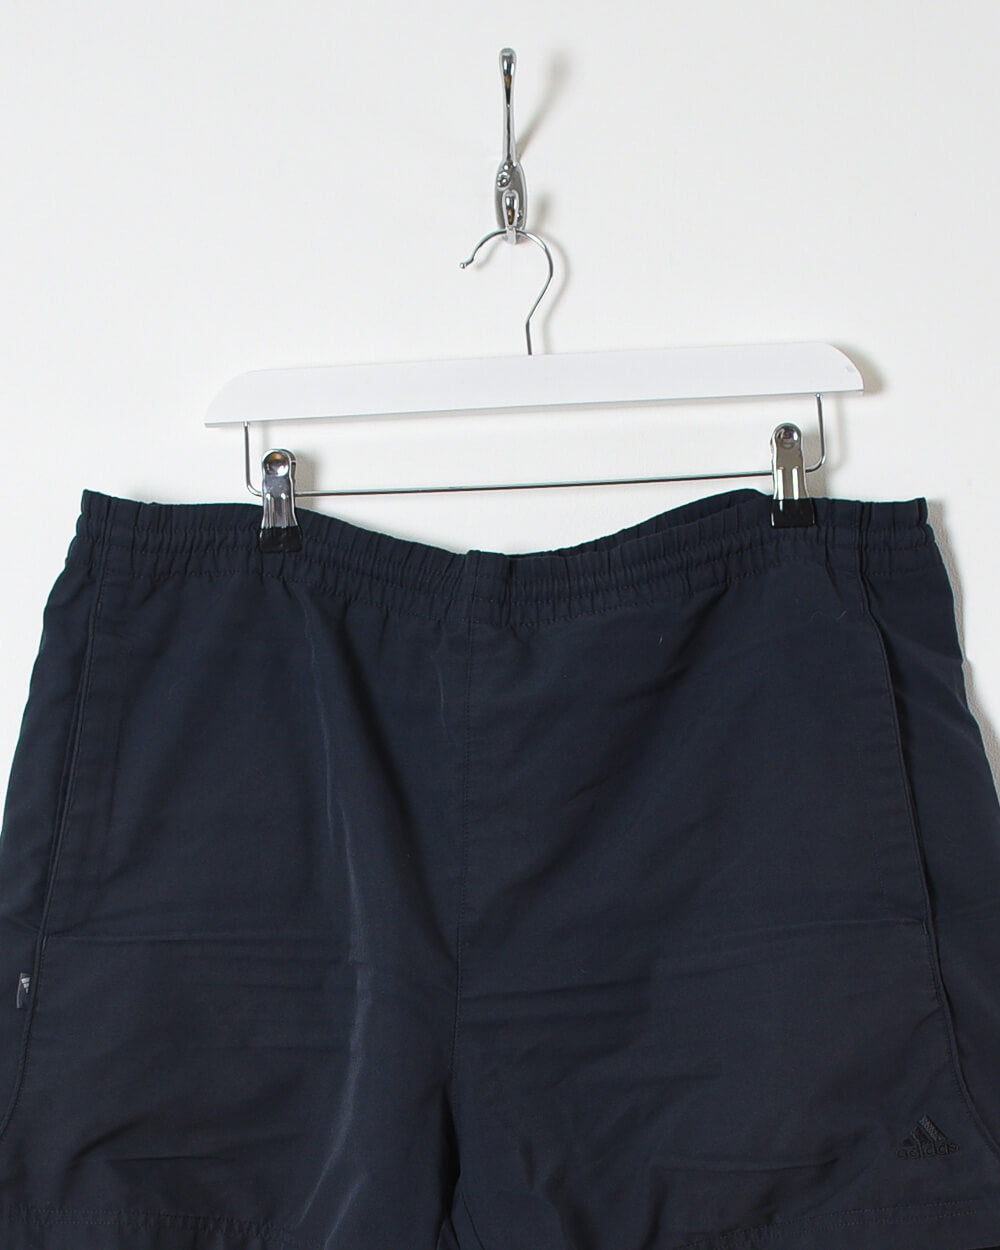 Adidas Swimwear Shorts - W38 L16 - Domno Vintage 90s, 80s, 00s Retro and Vintage Clothing 